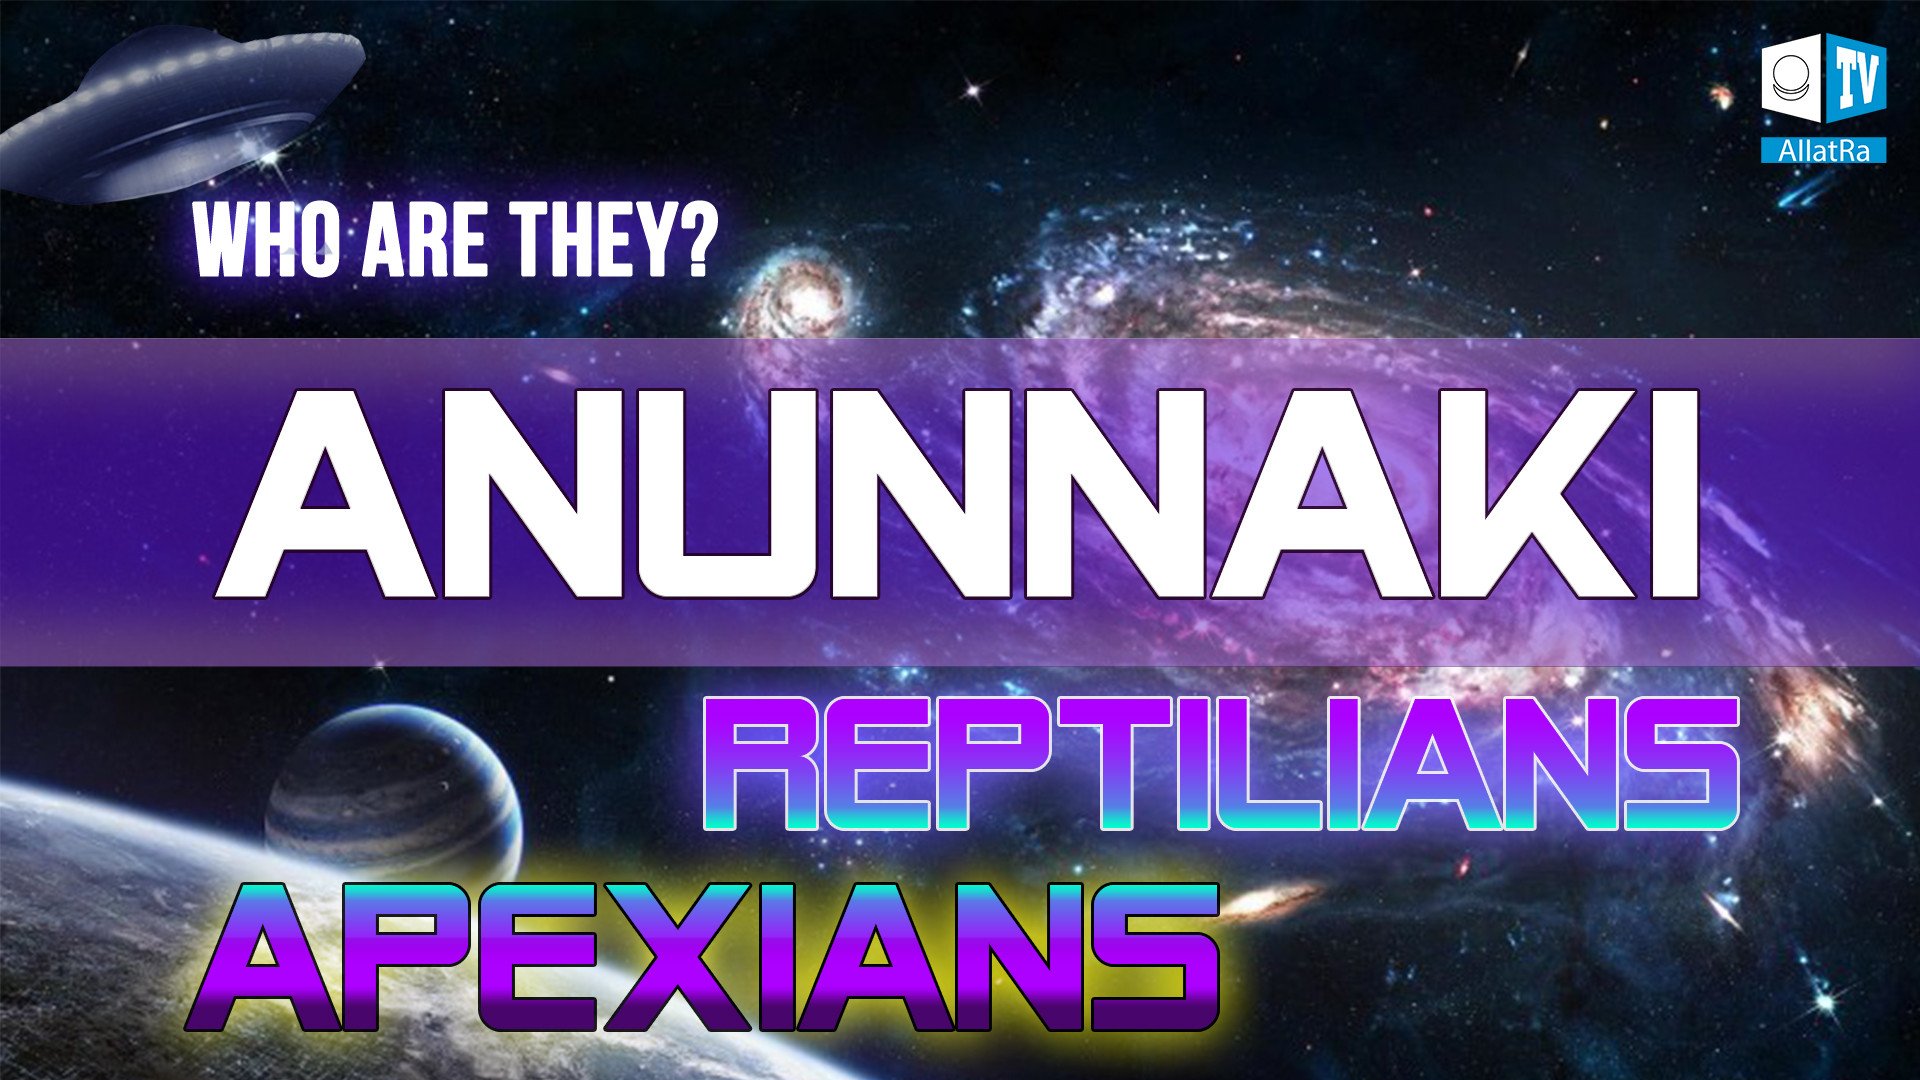 Anunnaki, Reptilians, Apexians (Grey aliens) What do we know about alien community?